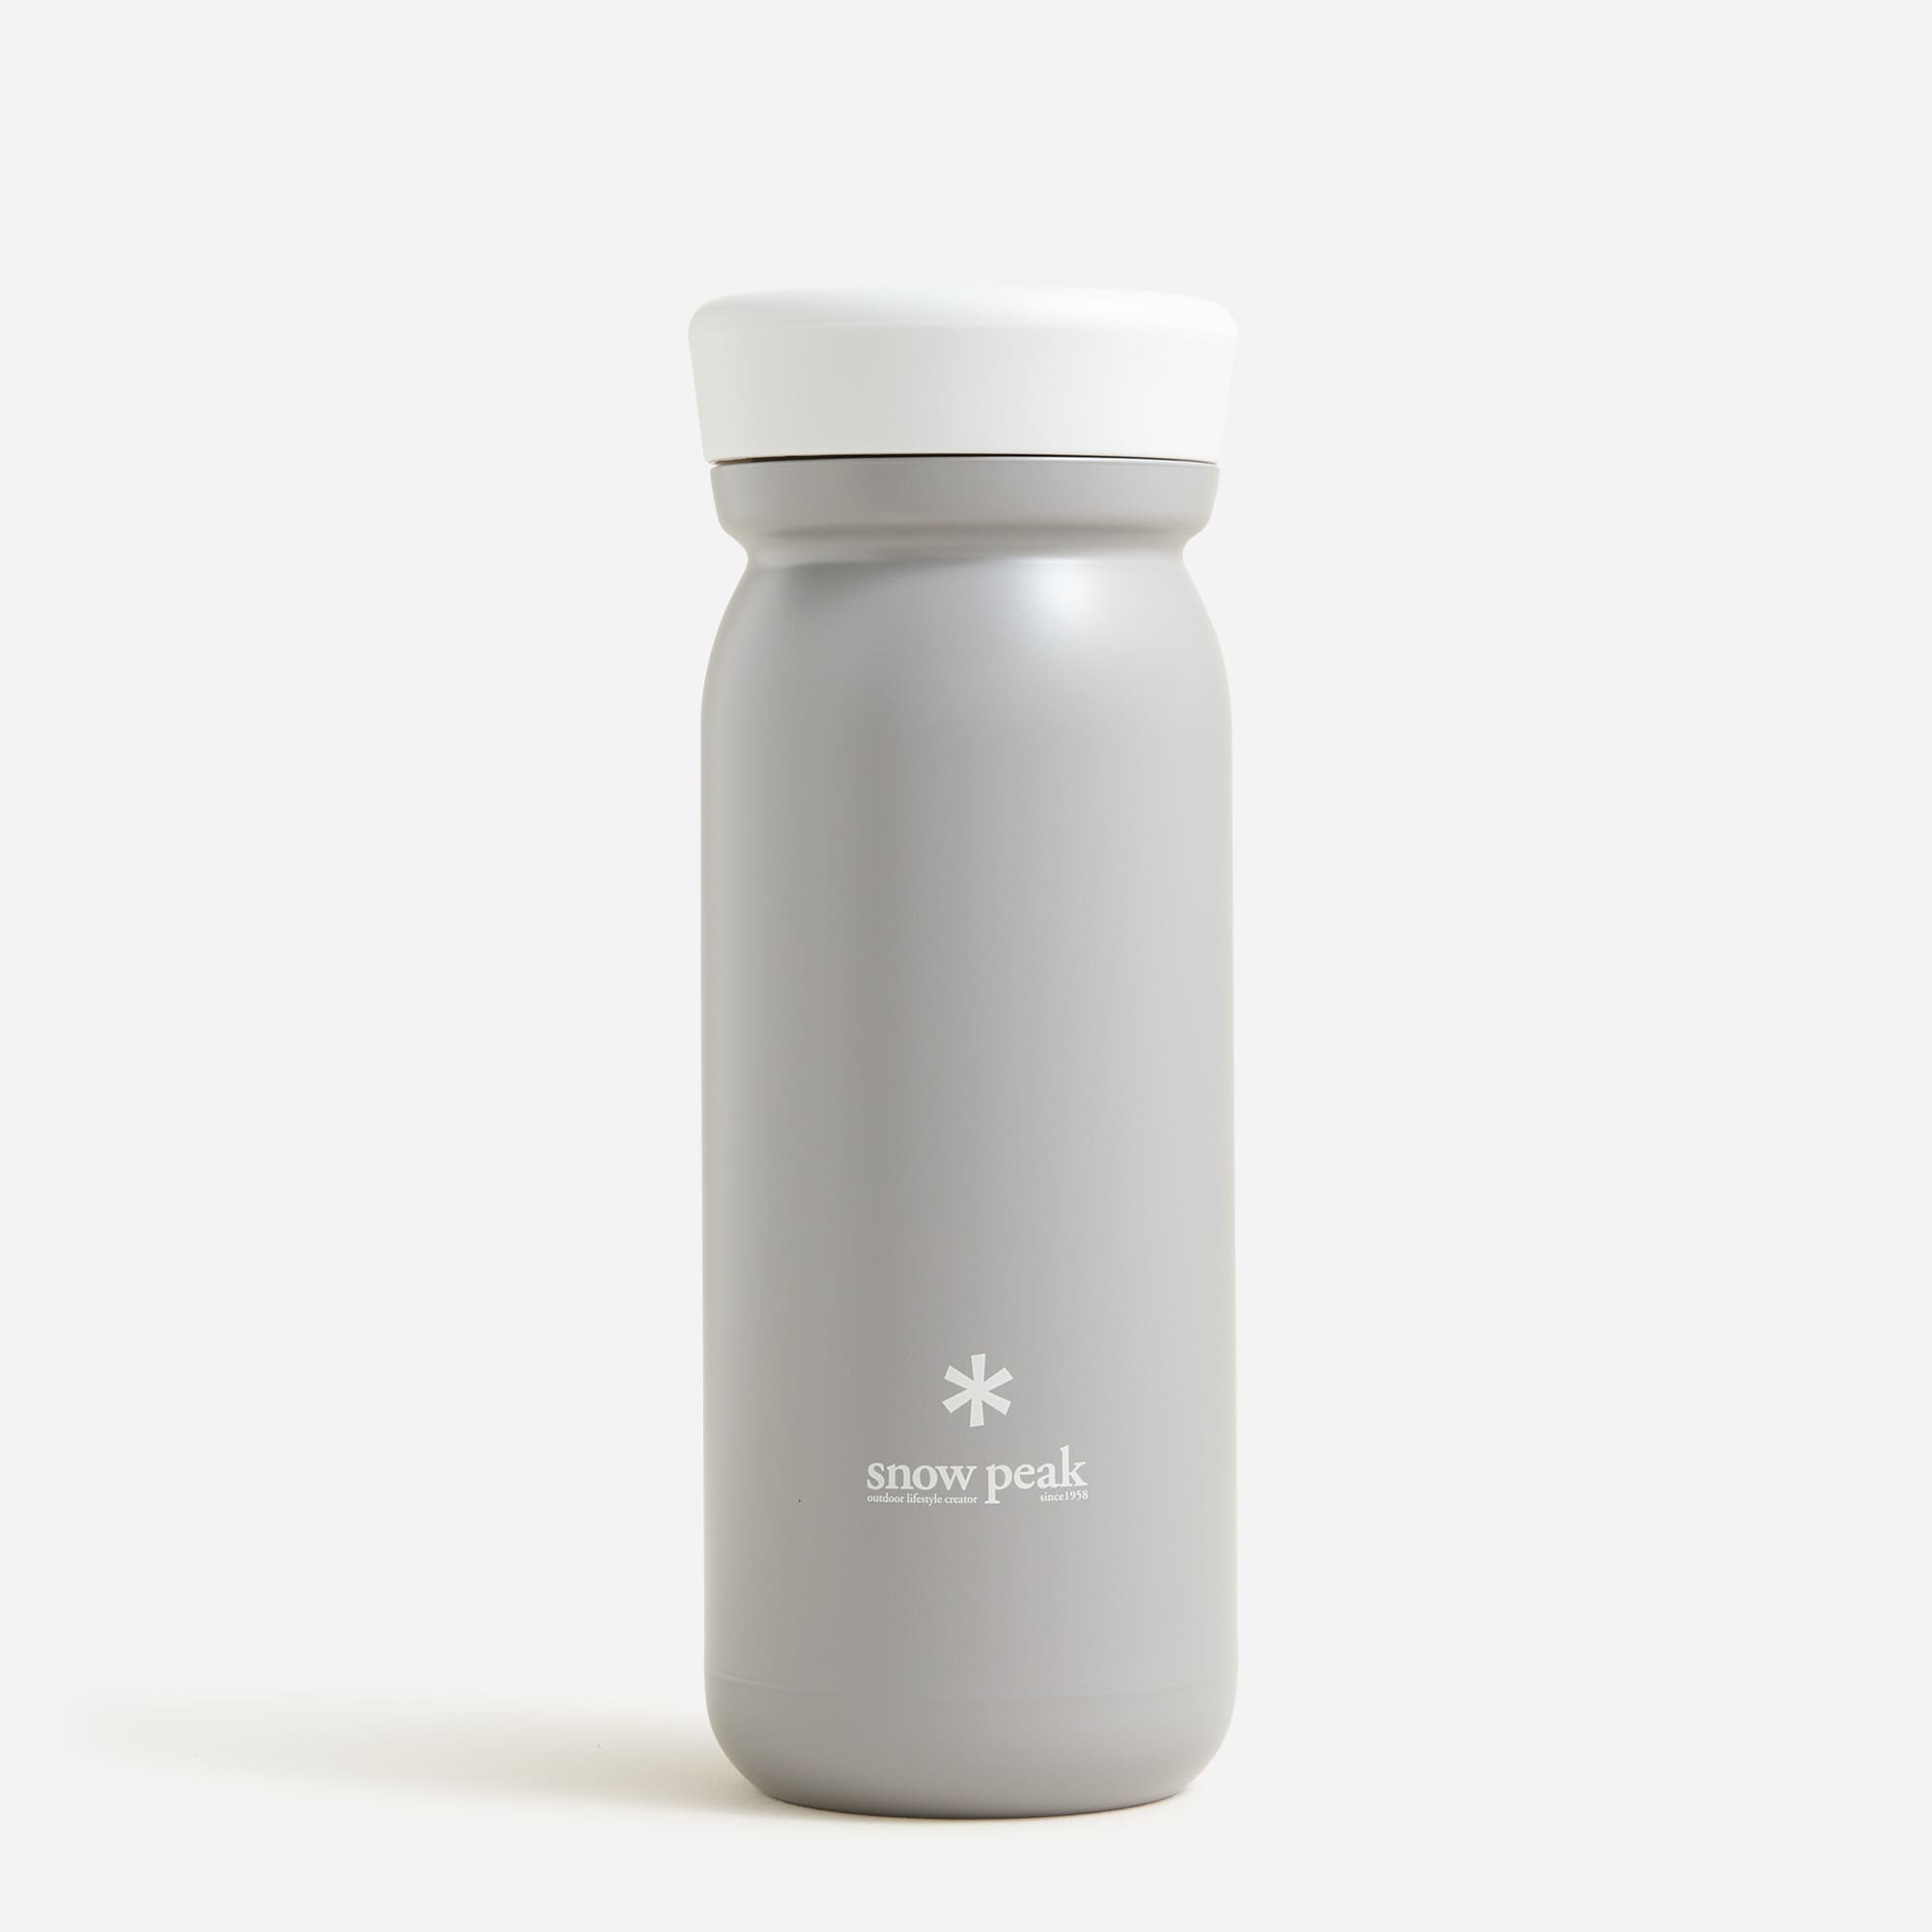 Jcrew Snow Peak stainless steel milk bottle